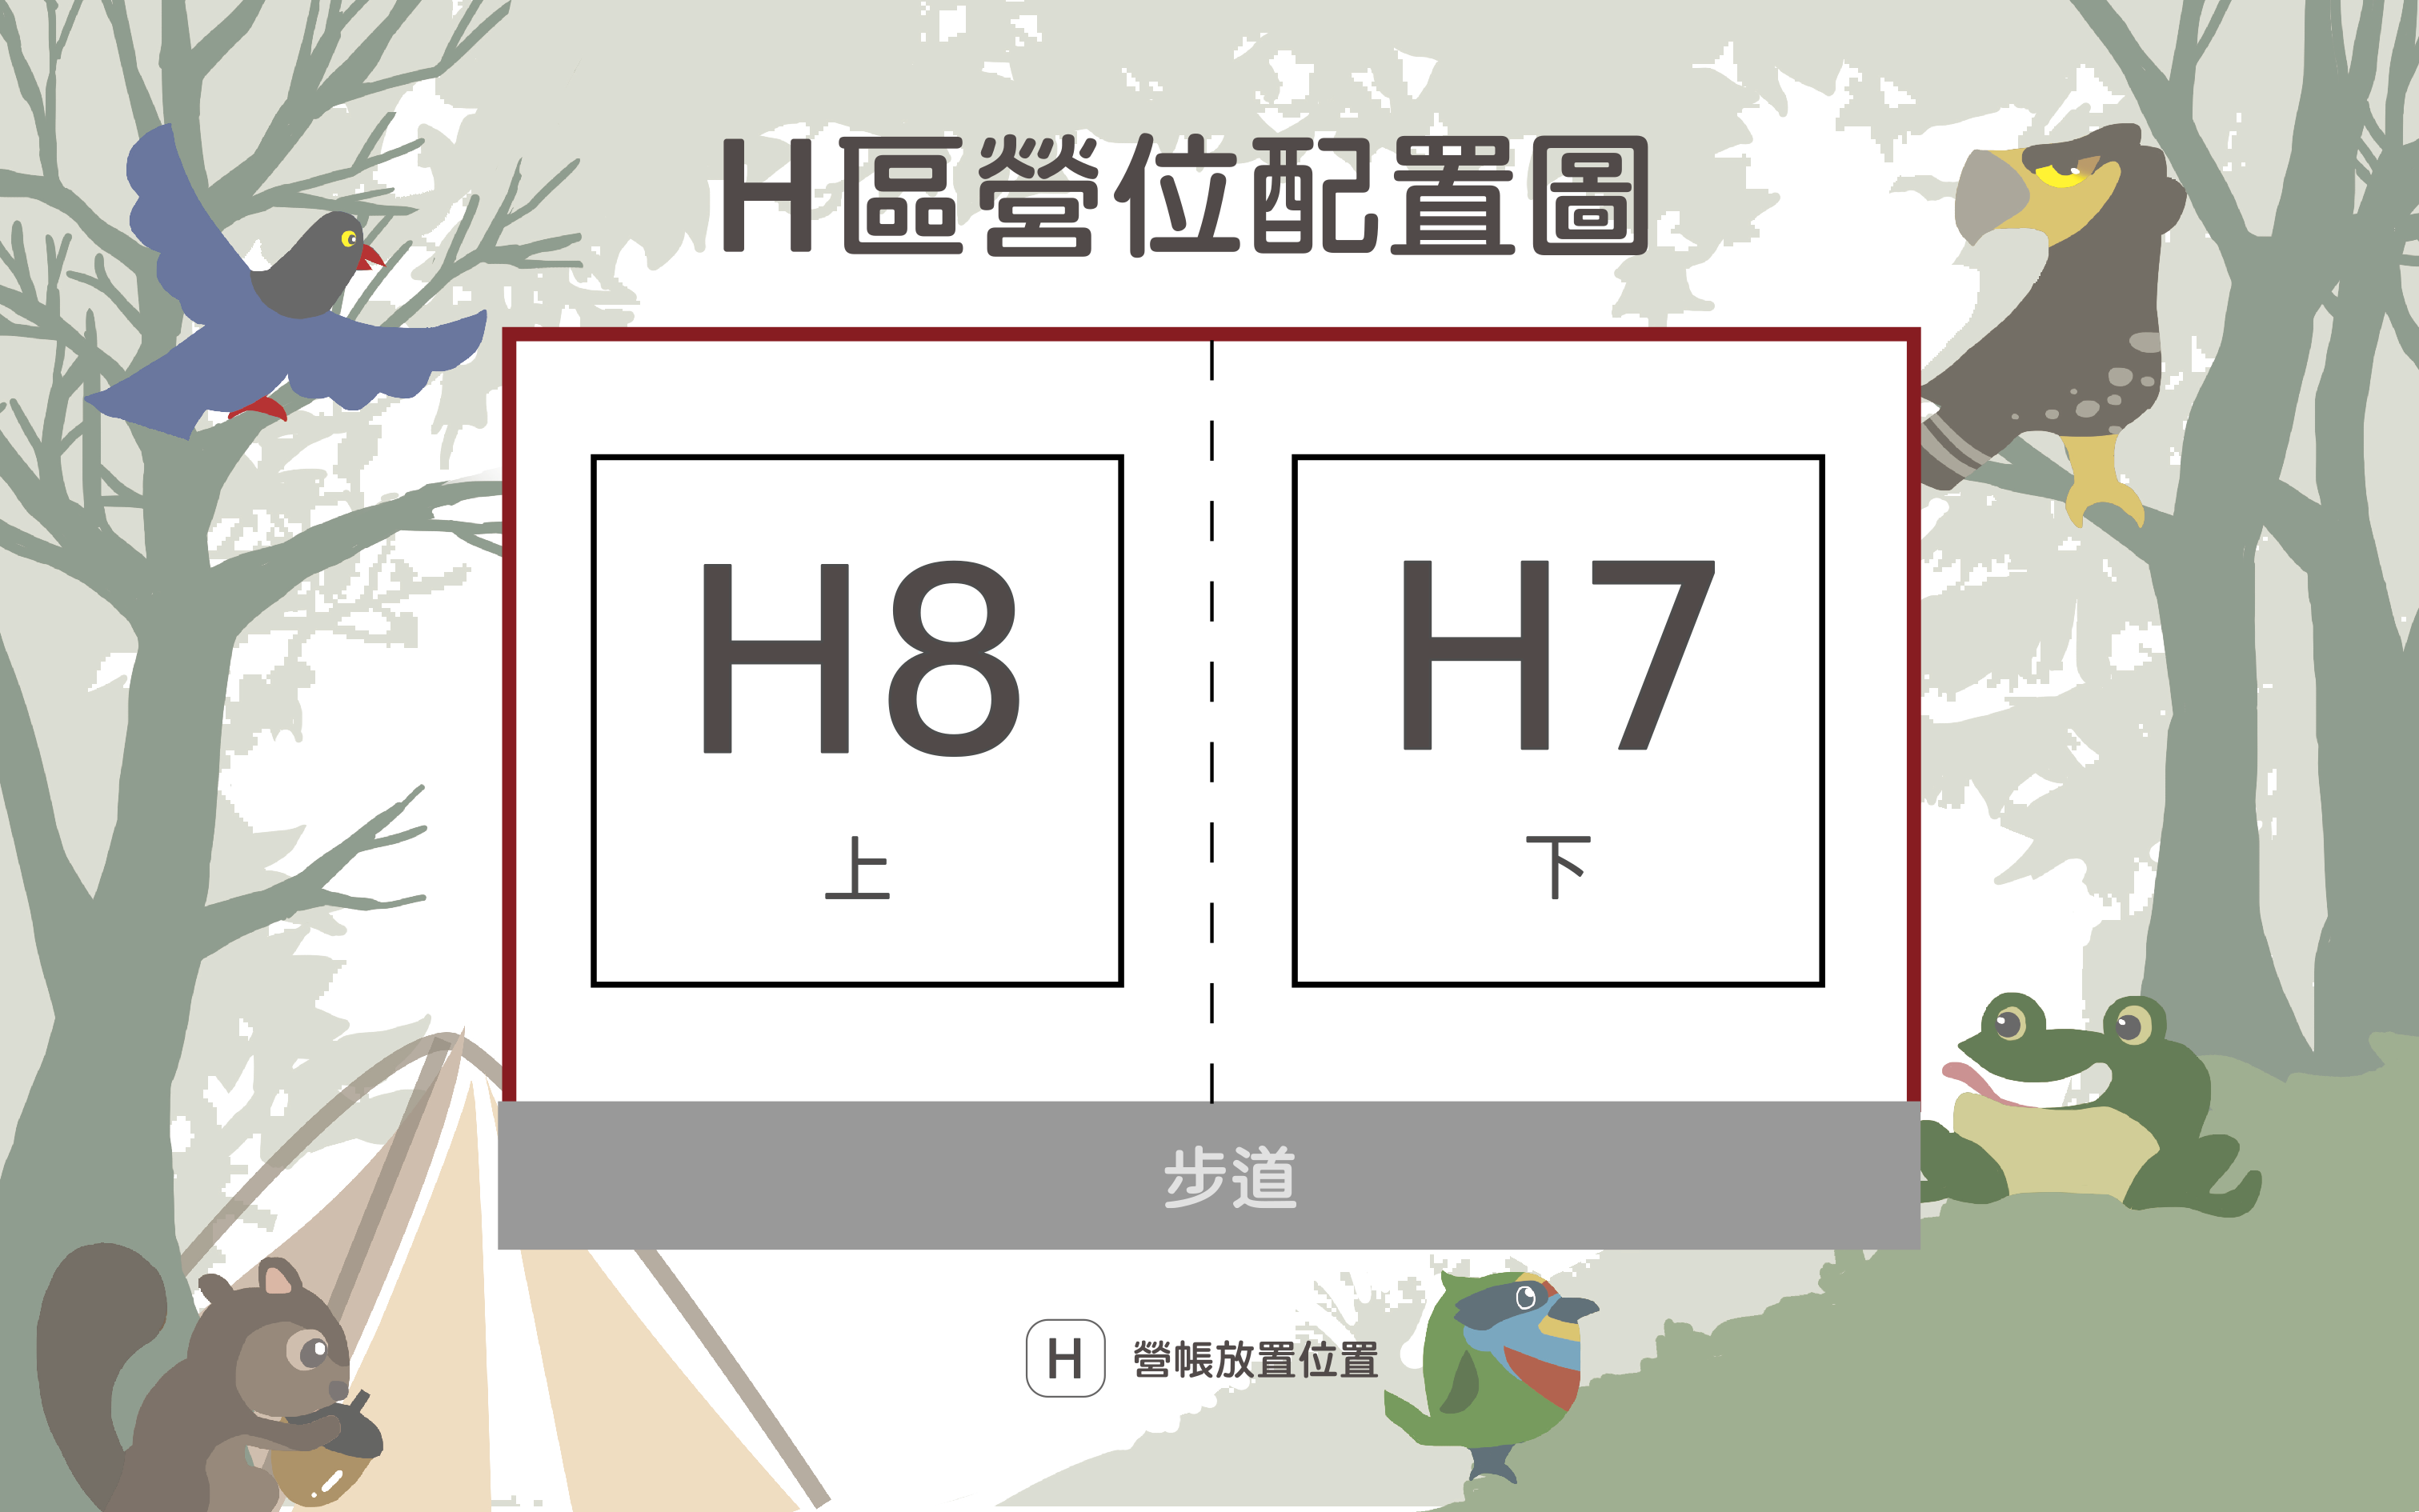 H7、H8區營位配置圖